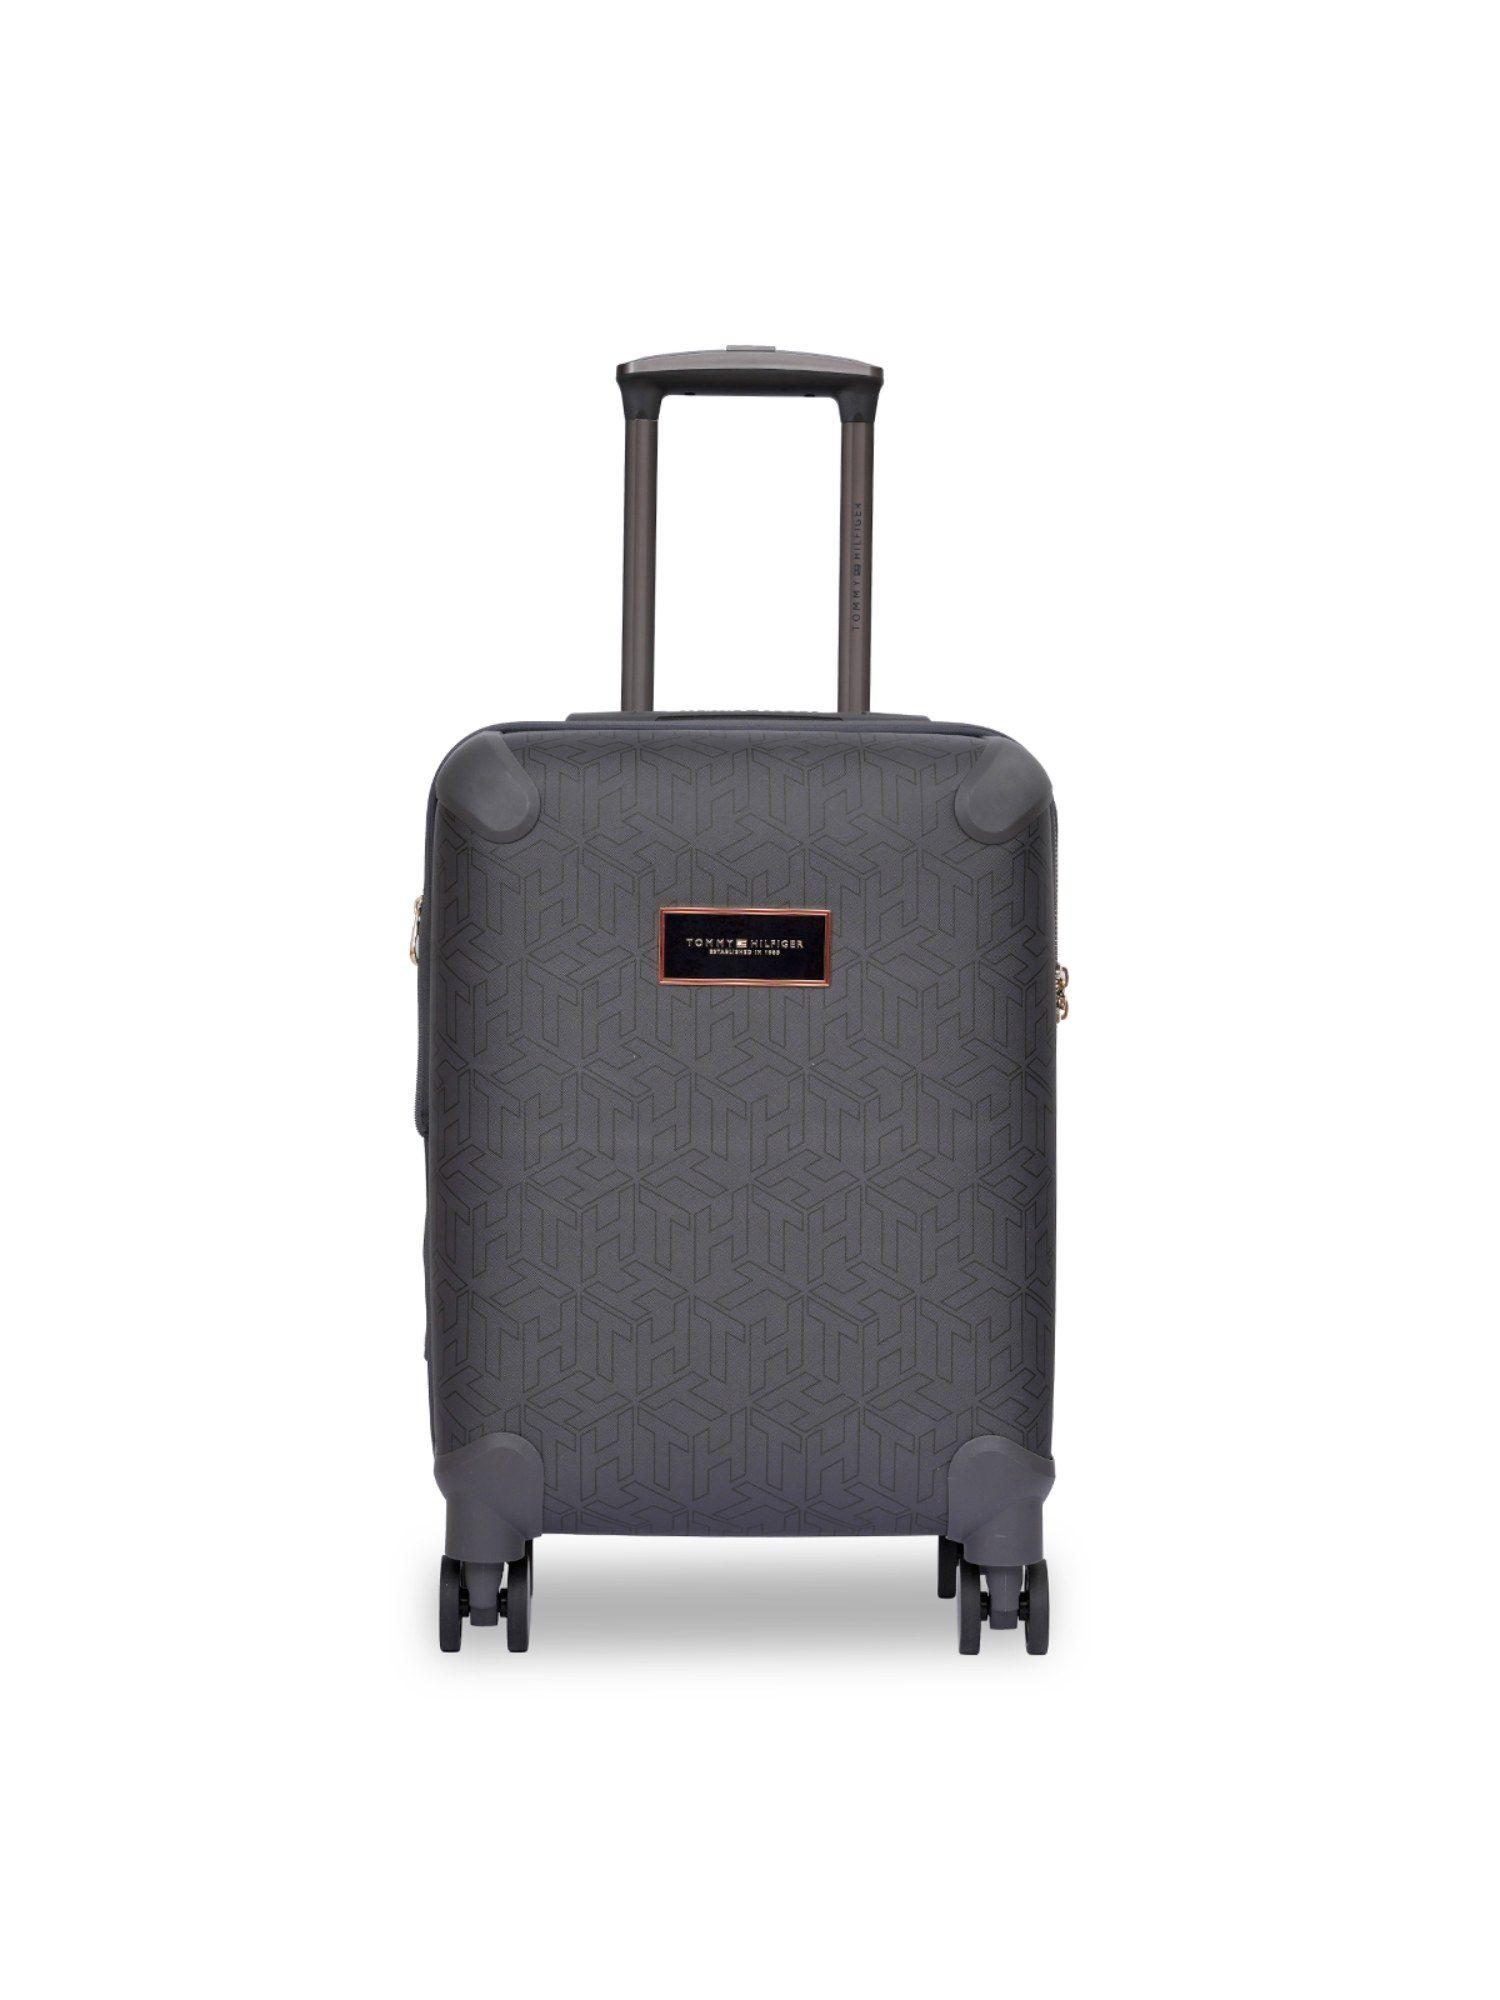 jazz unisex hard luggage - grey trolley bag